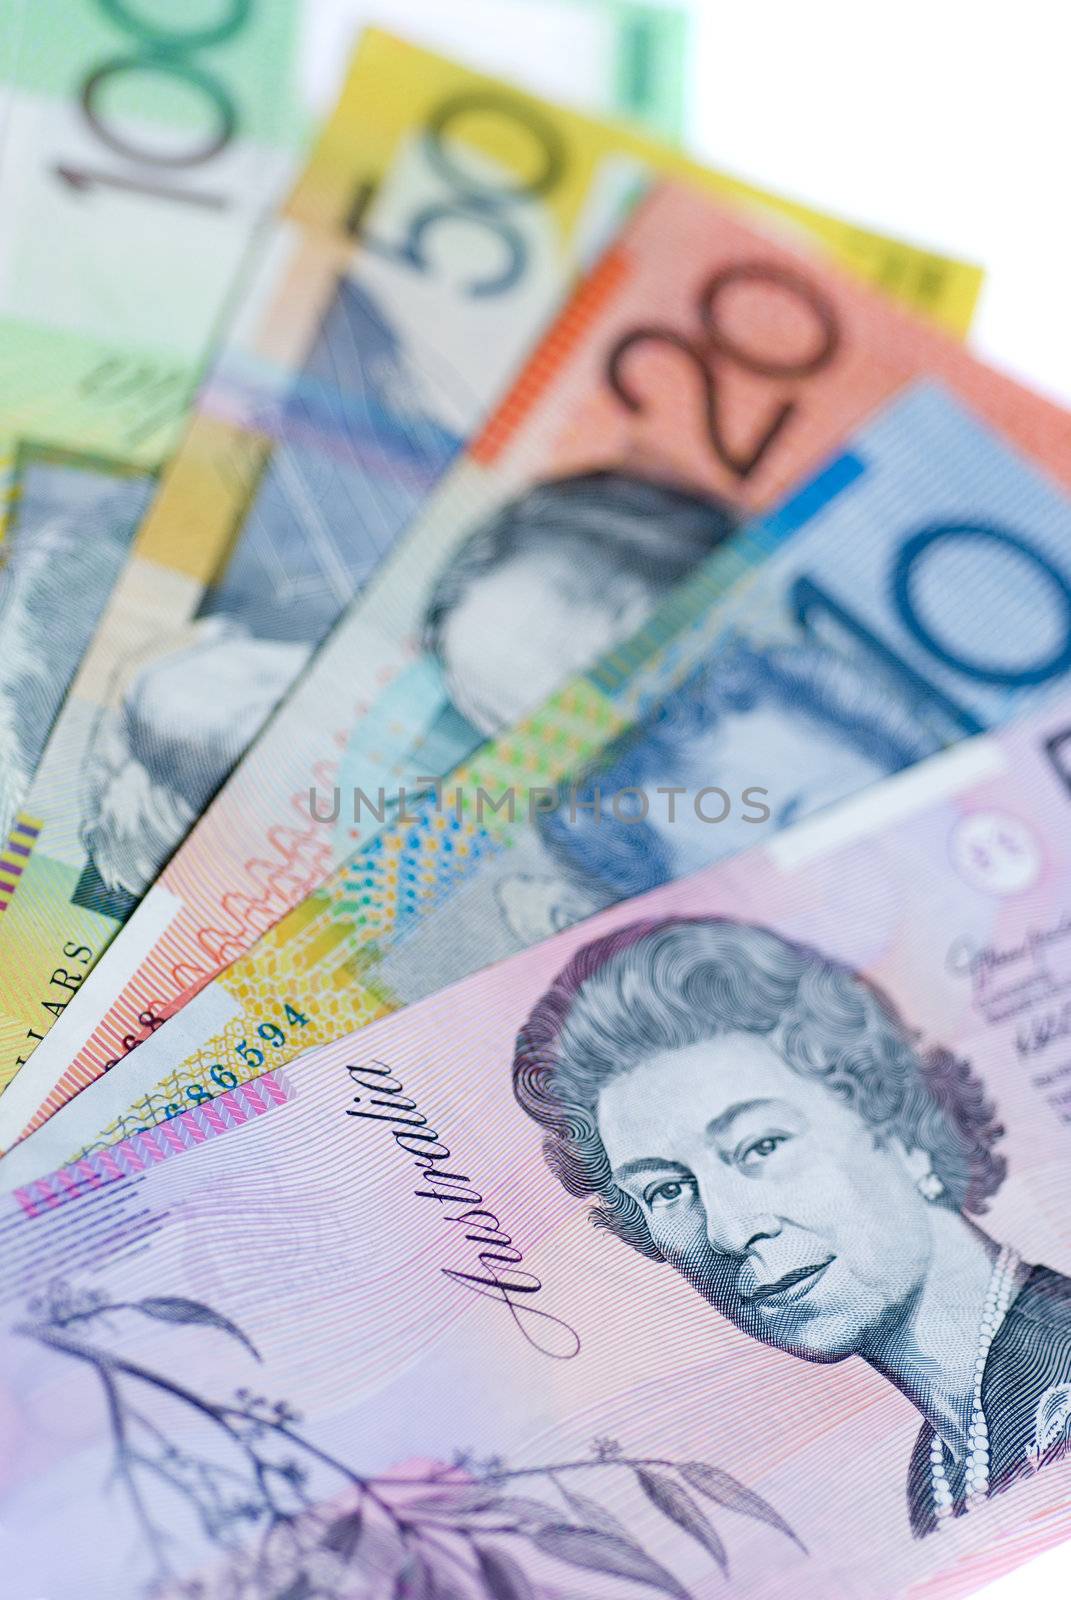 Five different denominations of Australian dollar notes